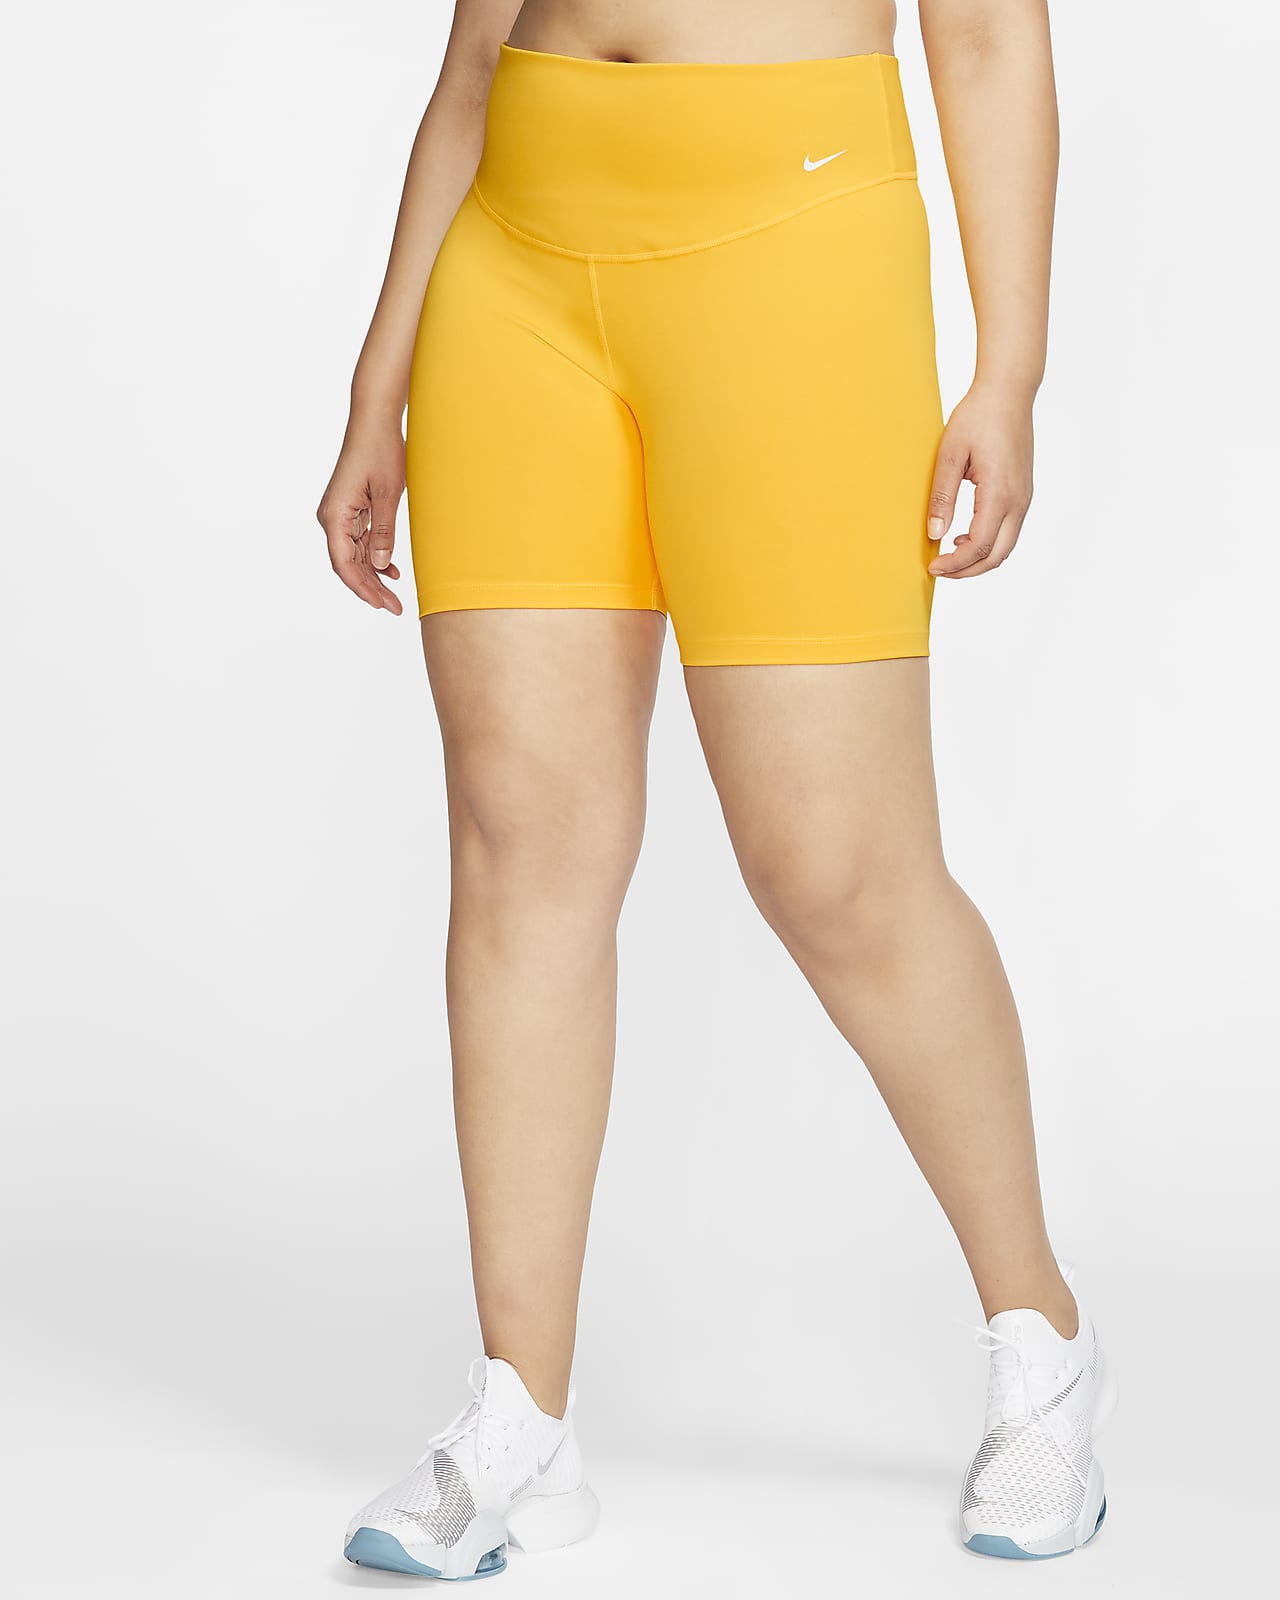 yellow shorts plus size